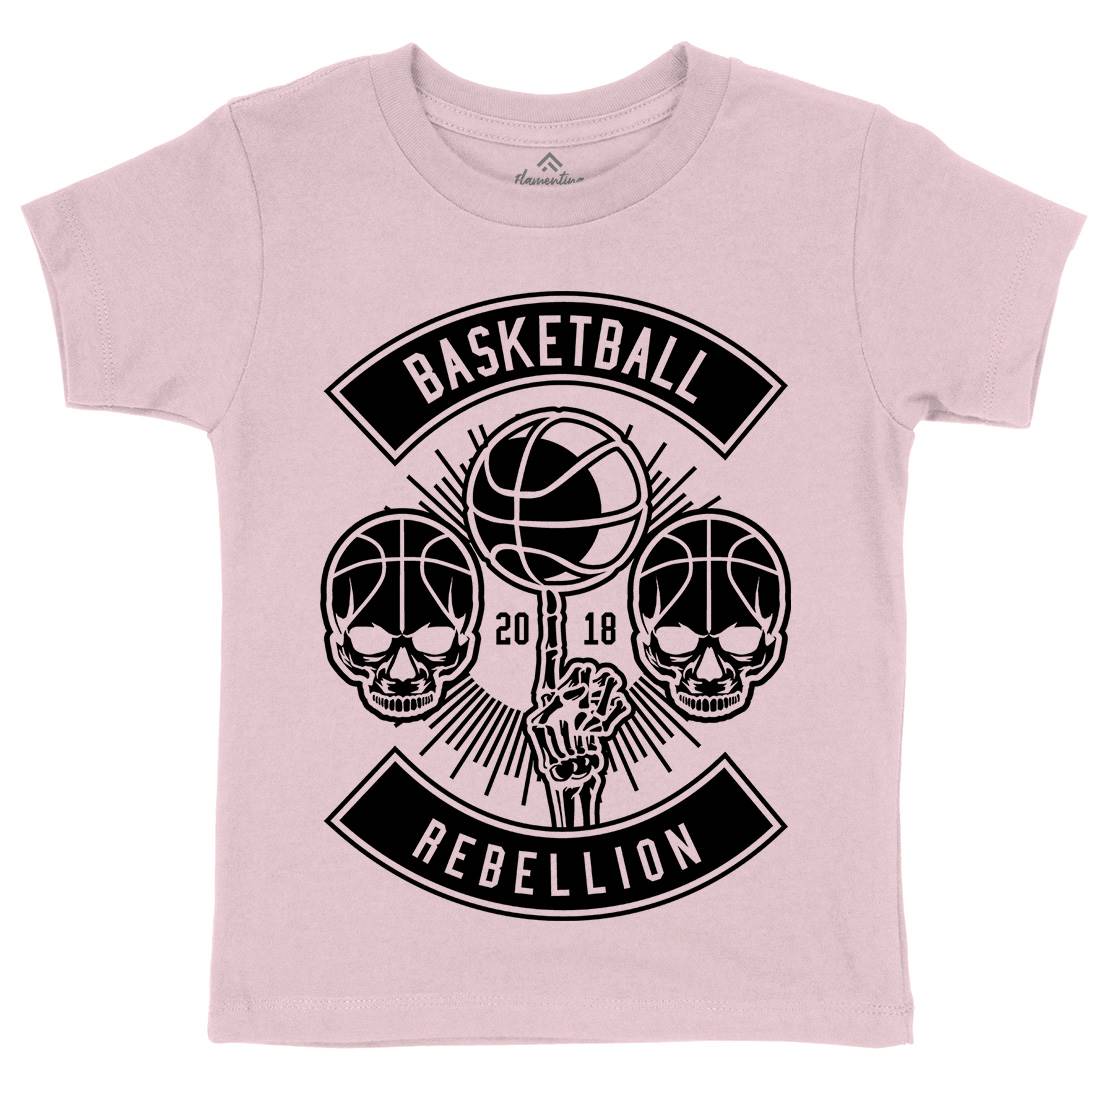 Basketball Rebellion Kids Crew Neck T-Shirt Sport B492